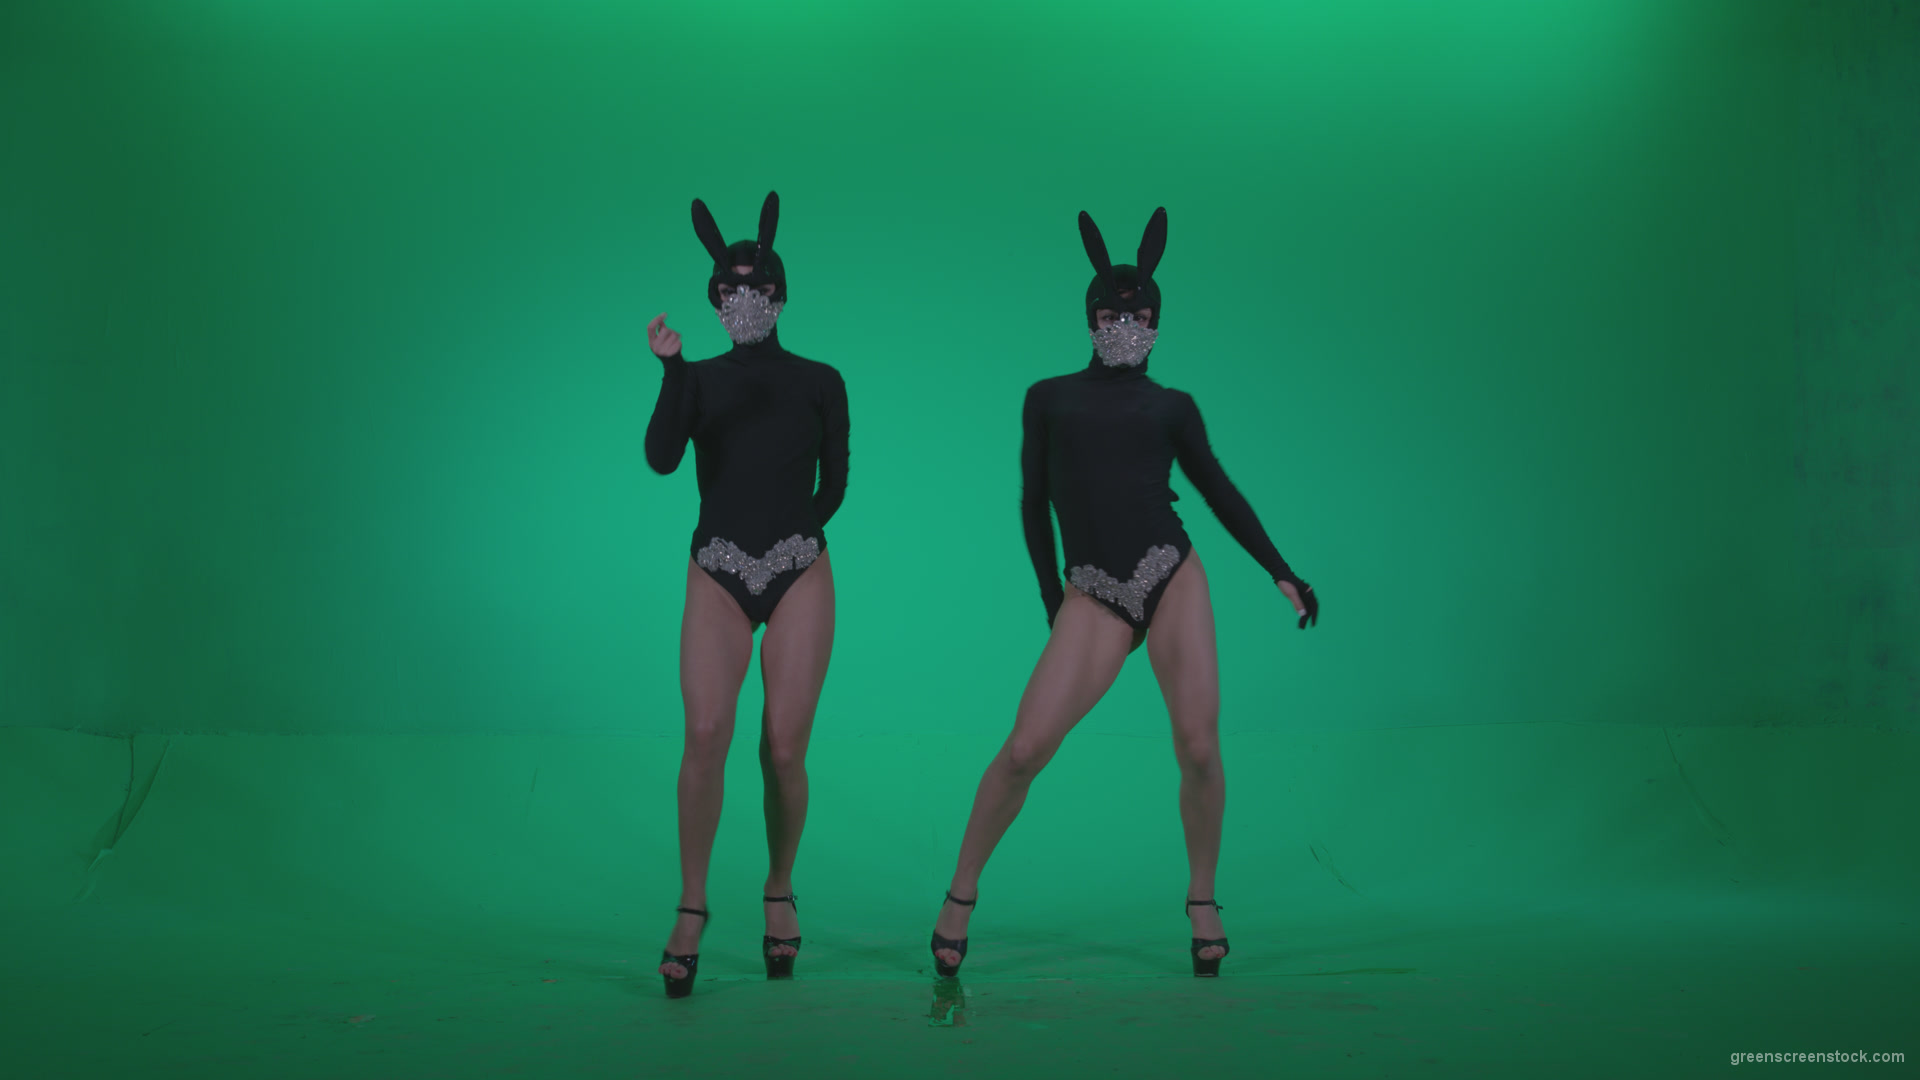 Go-go-Dancer-Black-Rabbit-u1-Green-Screen-Video-Footage_006 Green Screen Stock